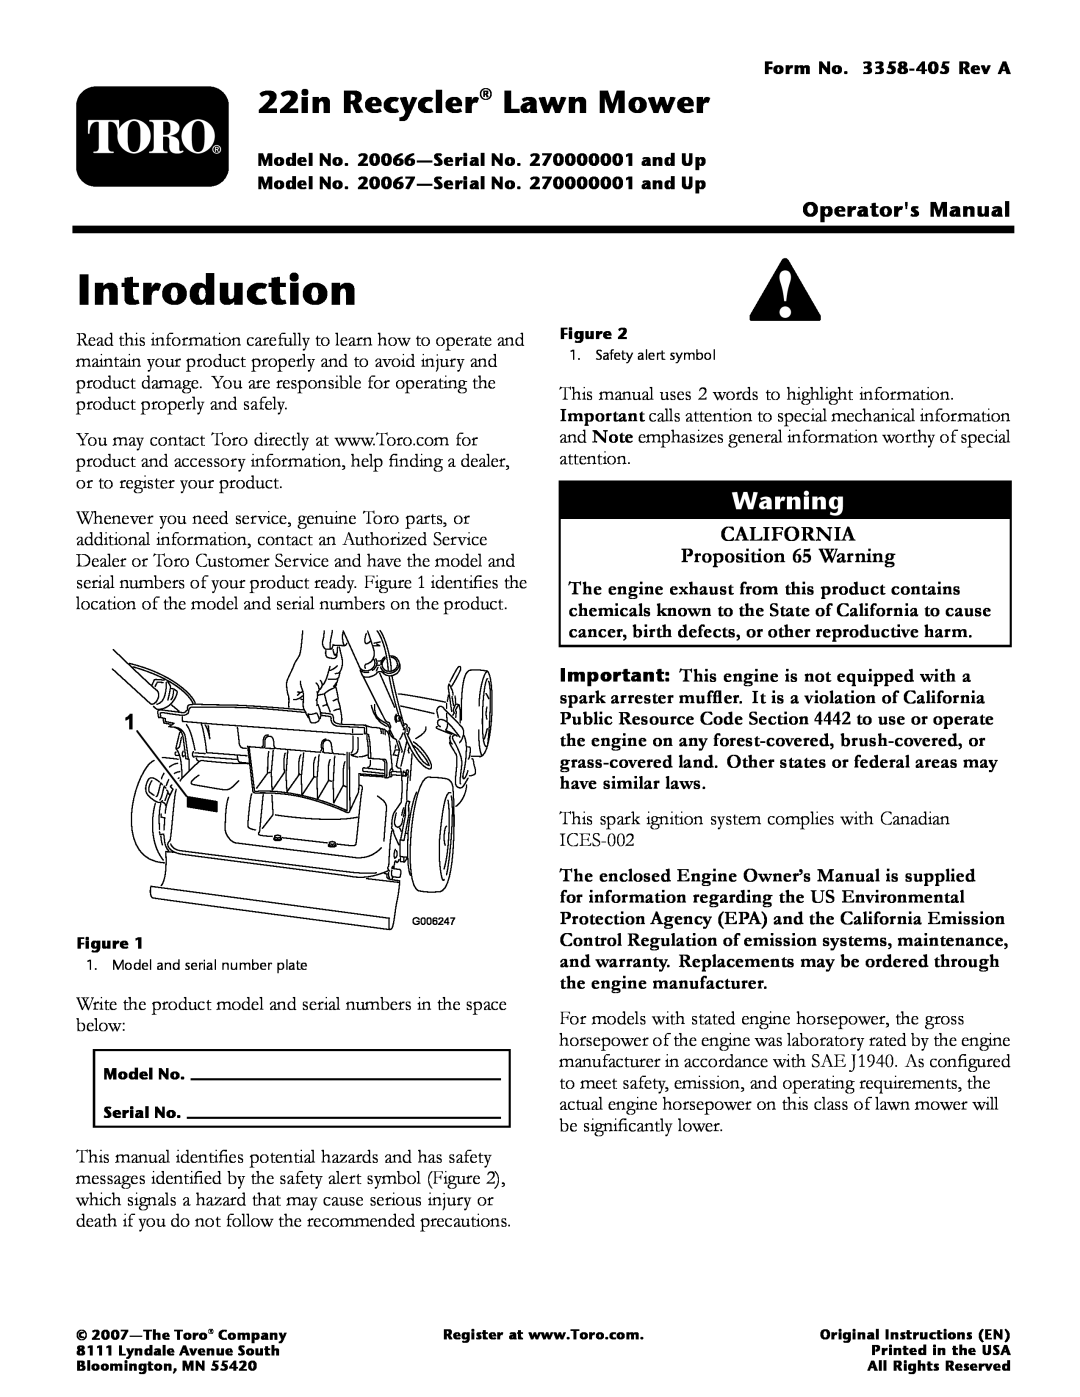 Toro 20066, 20067 manual Introduction, Operators Manual, CALIFORNIA Proposition 65 Warning, 22in Recycler Lawn Mower 